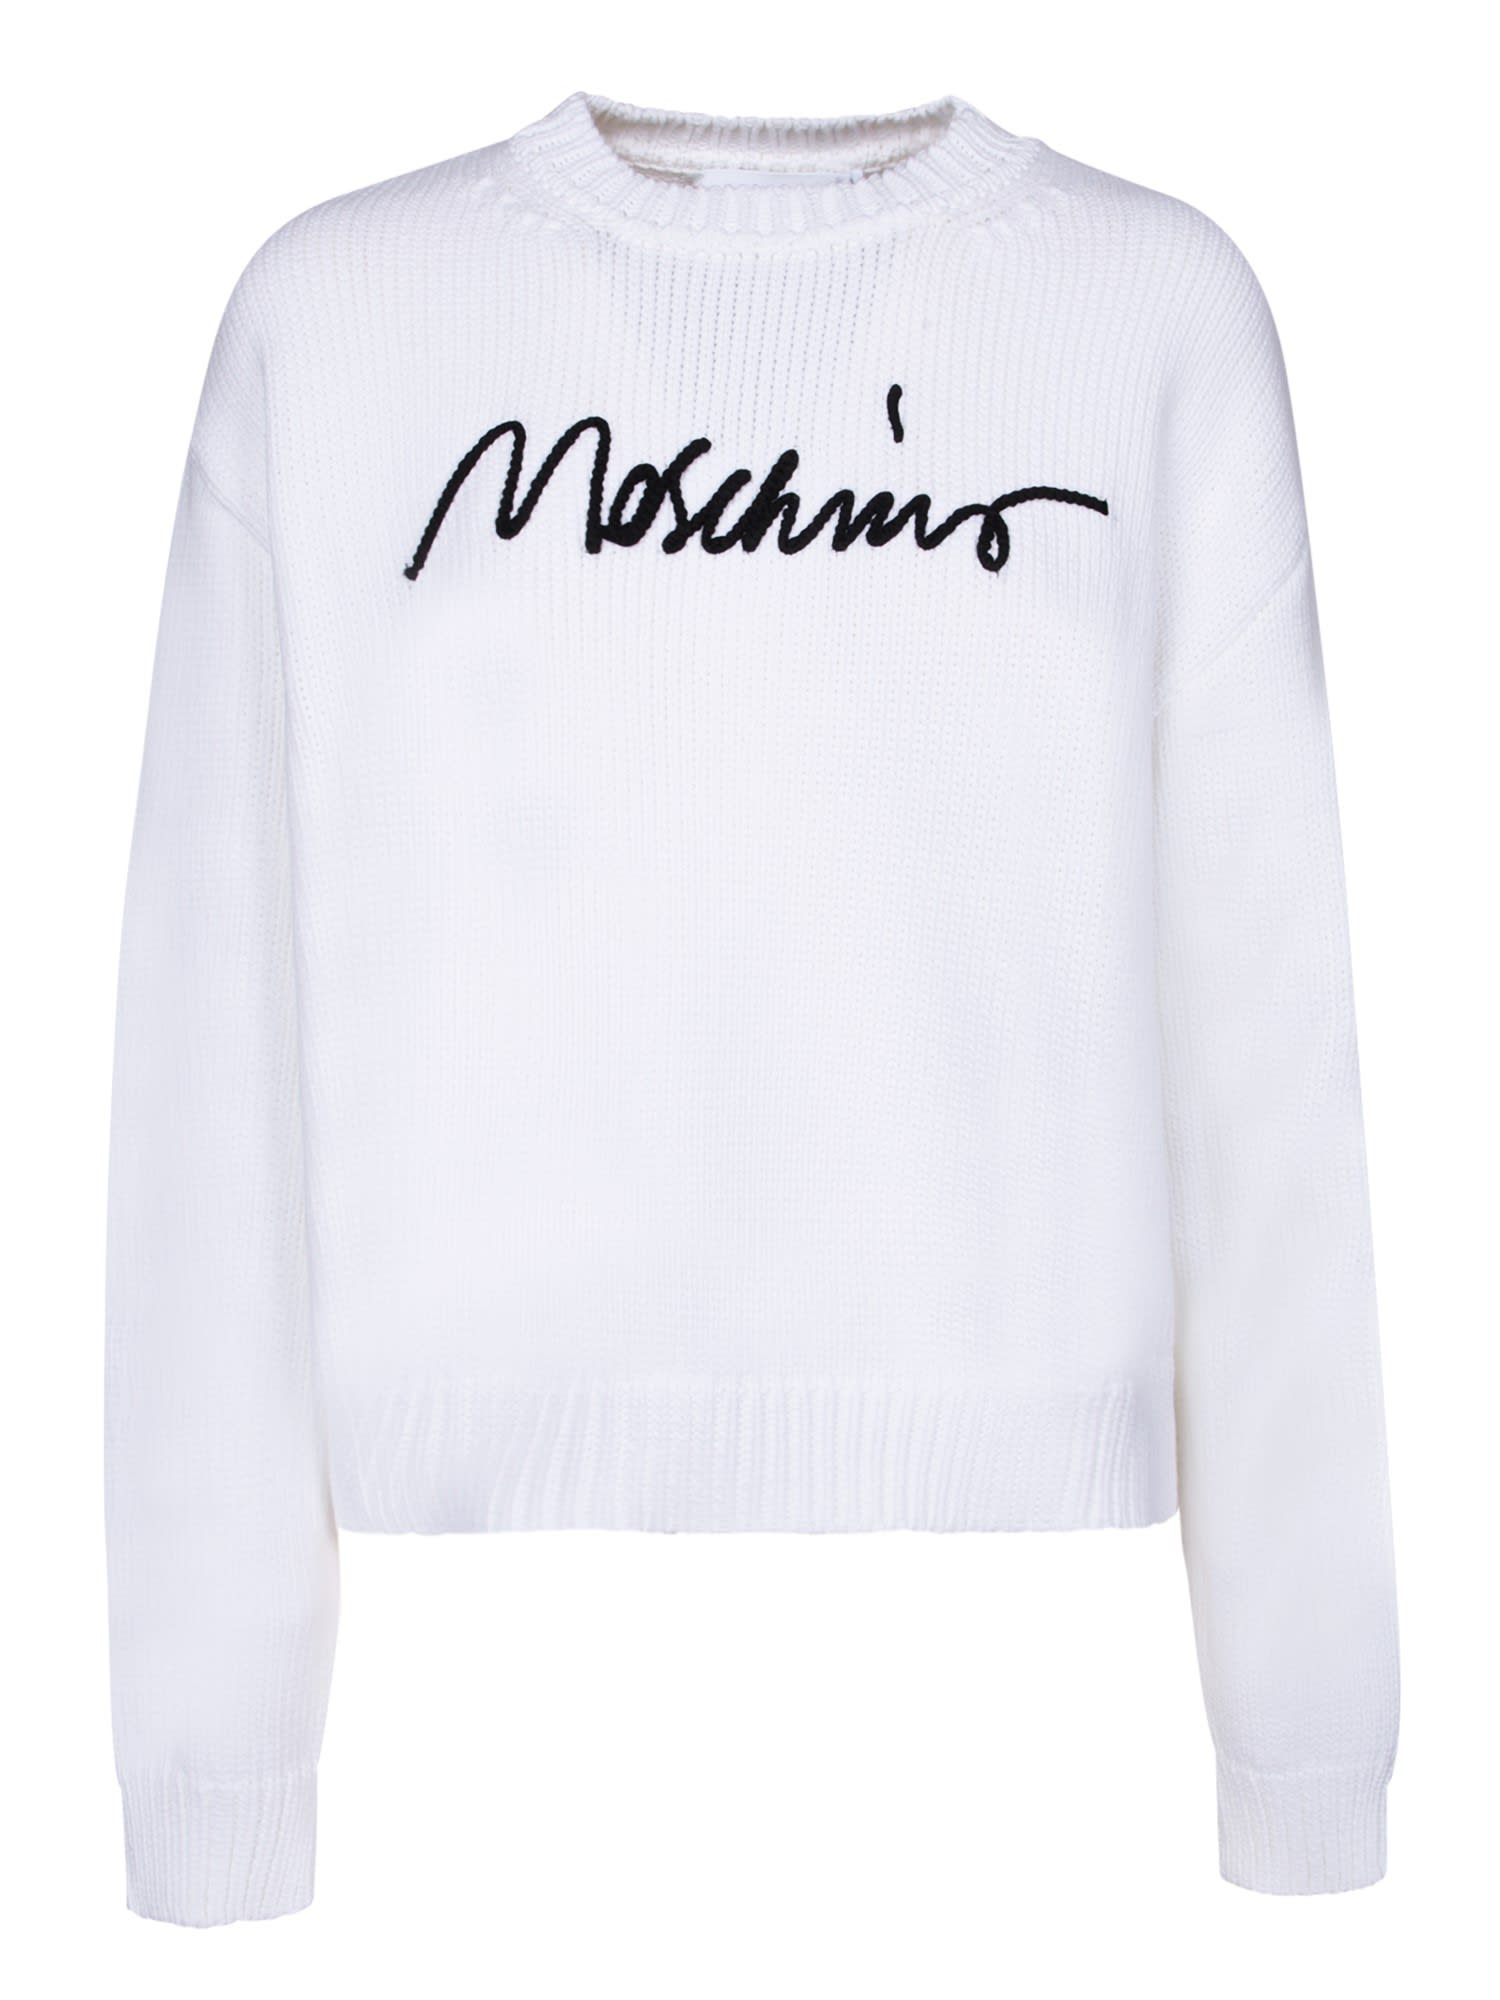 Shop Moschino White Cotton Crewneck Sweater